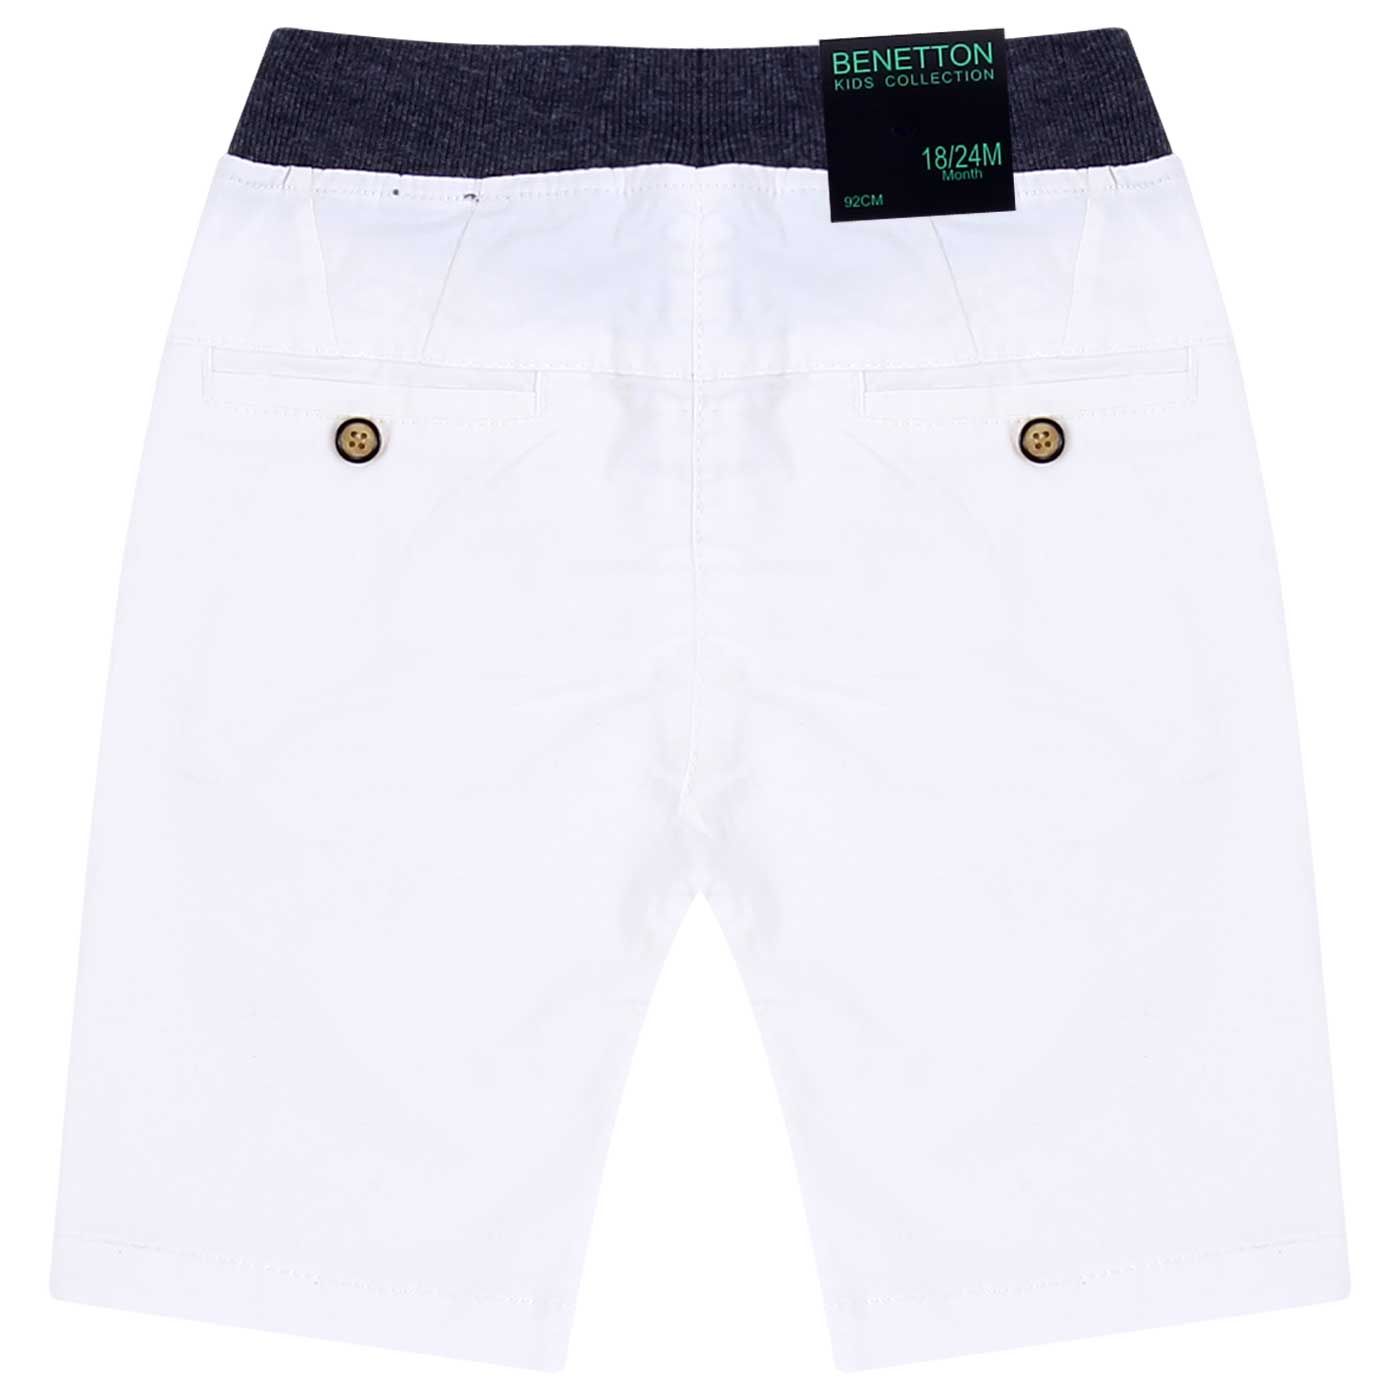 Kiddiewear Baby Boy Short Pants-White-6-9M - 2